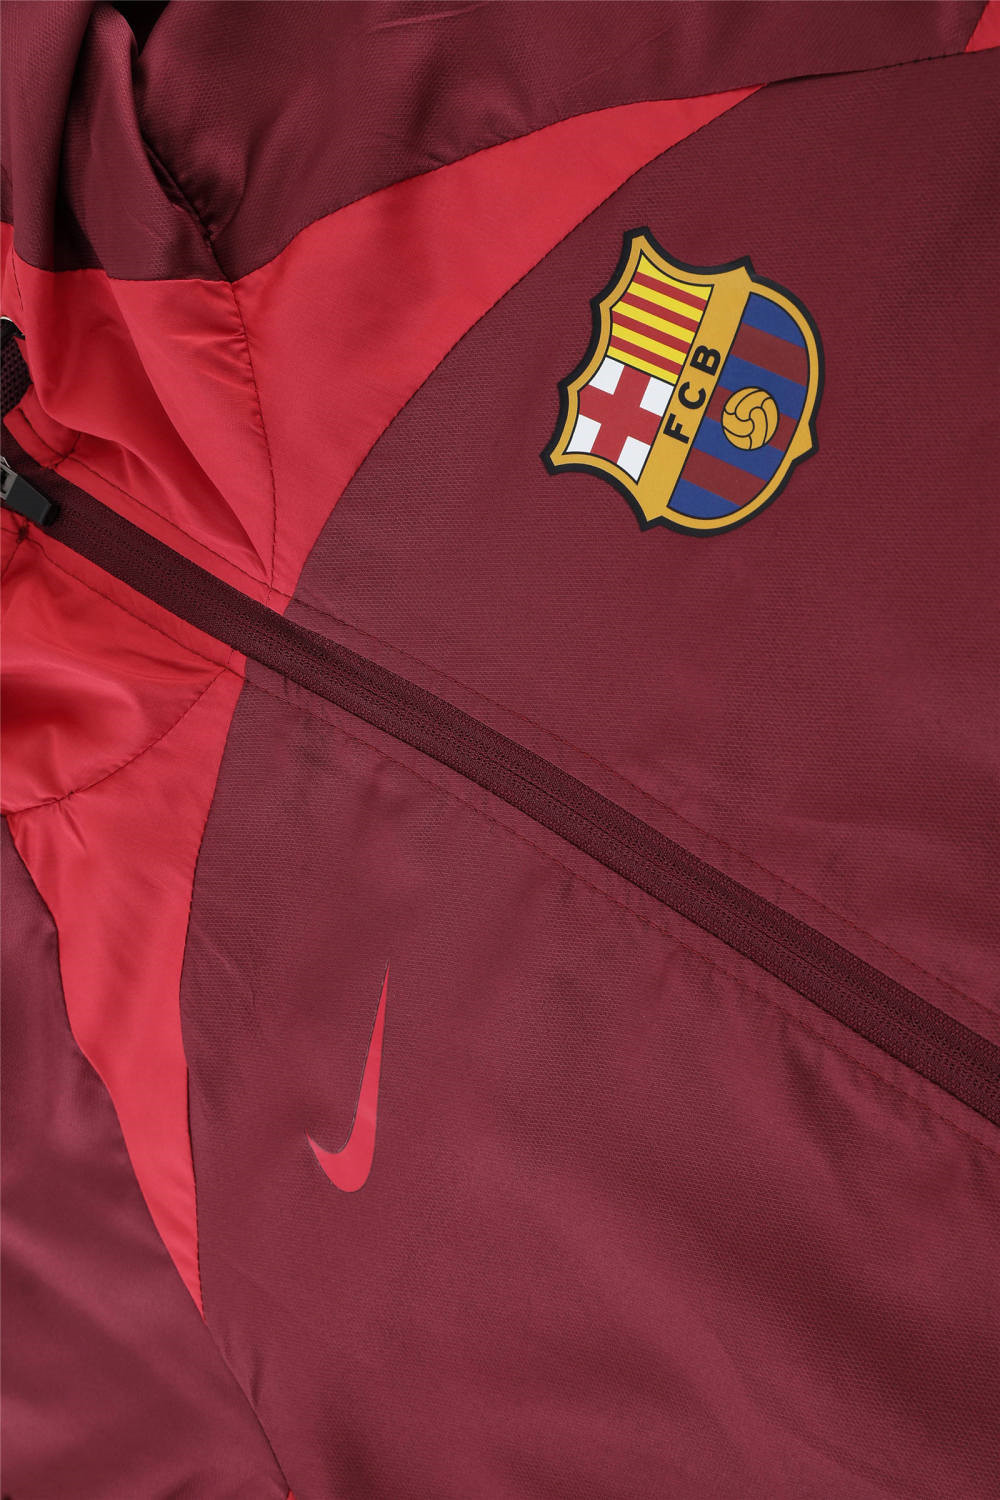 Barcelona All Weather Windrunner Soccer Jacket Burgundy 2021/22 Men's (Hoodie)